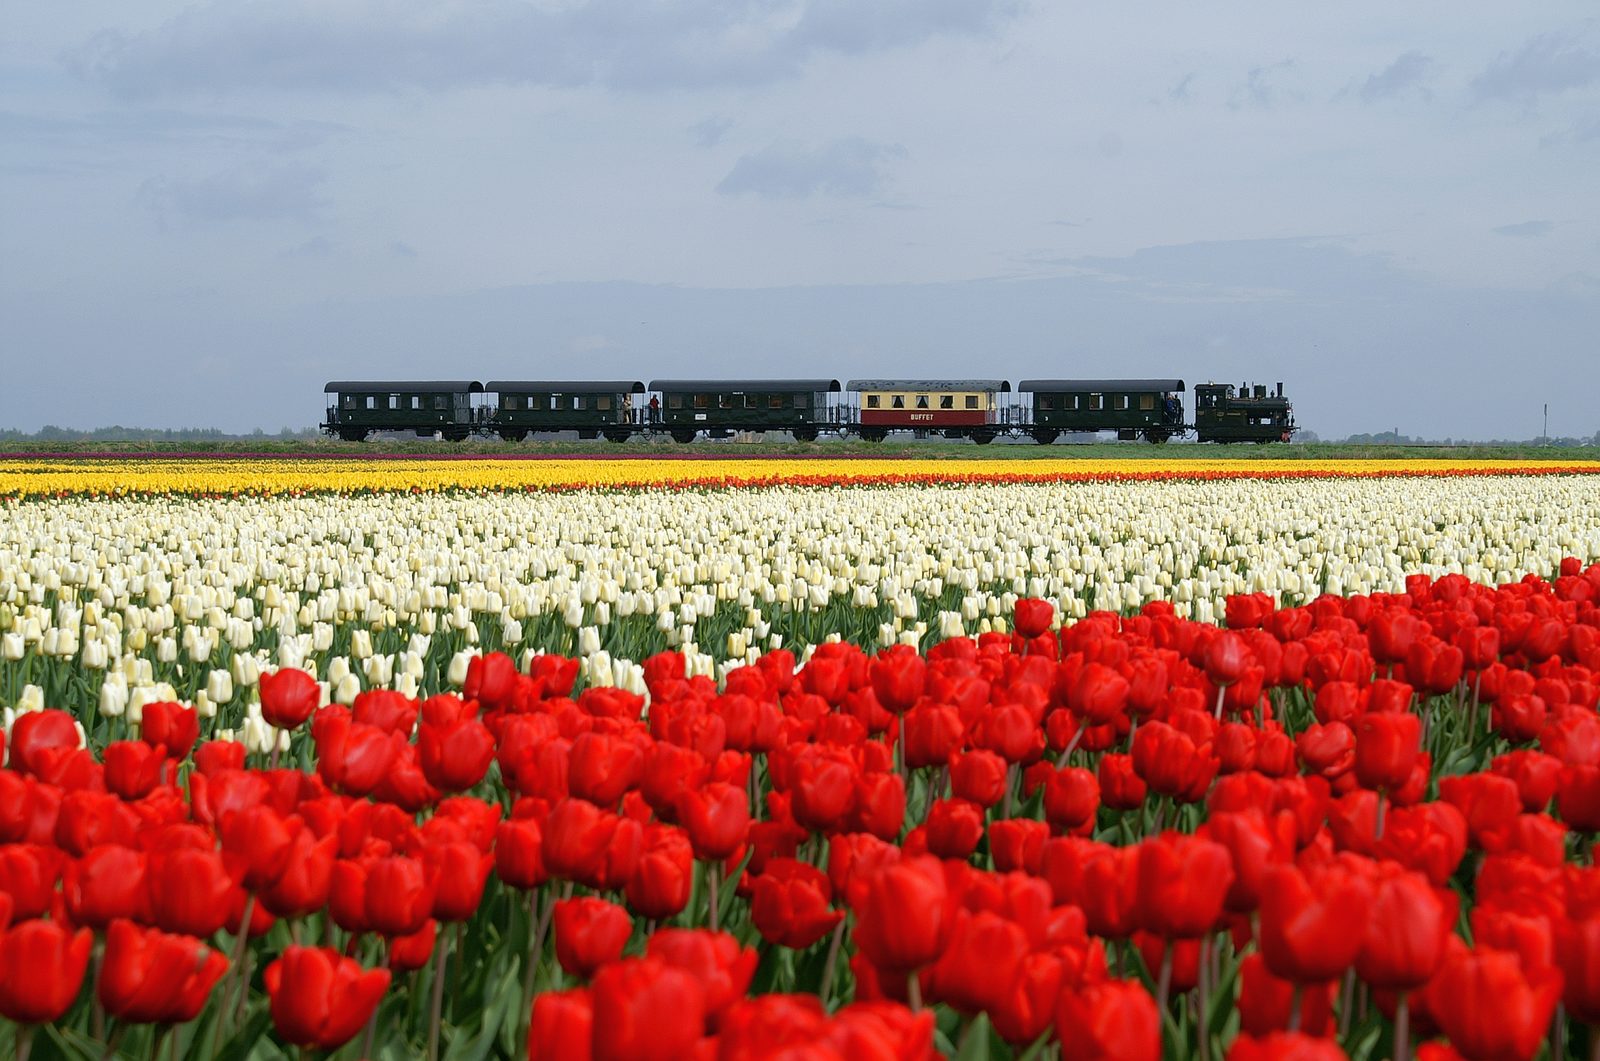 Steam tram Hoorn - Medemblik